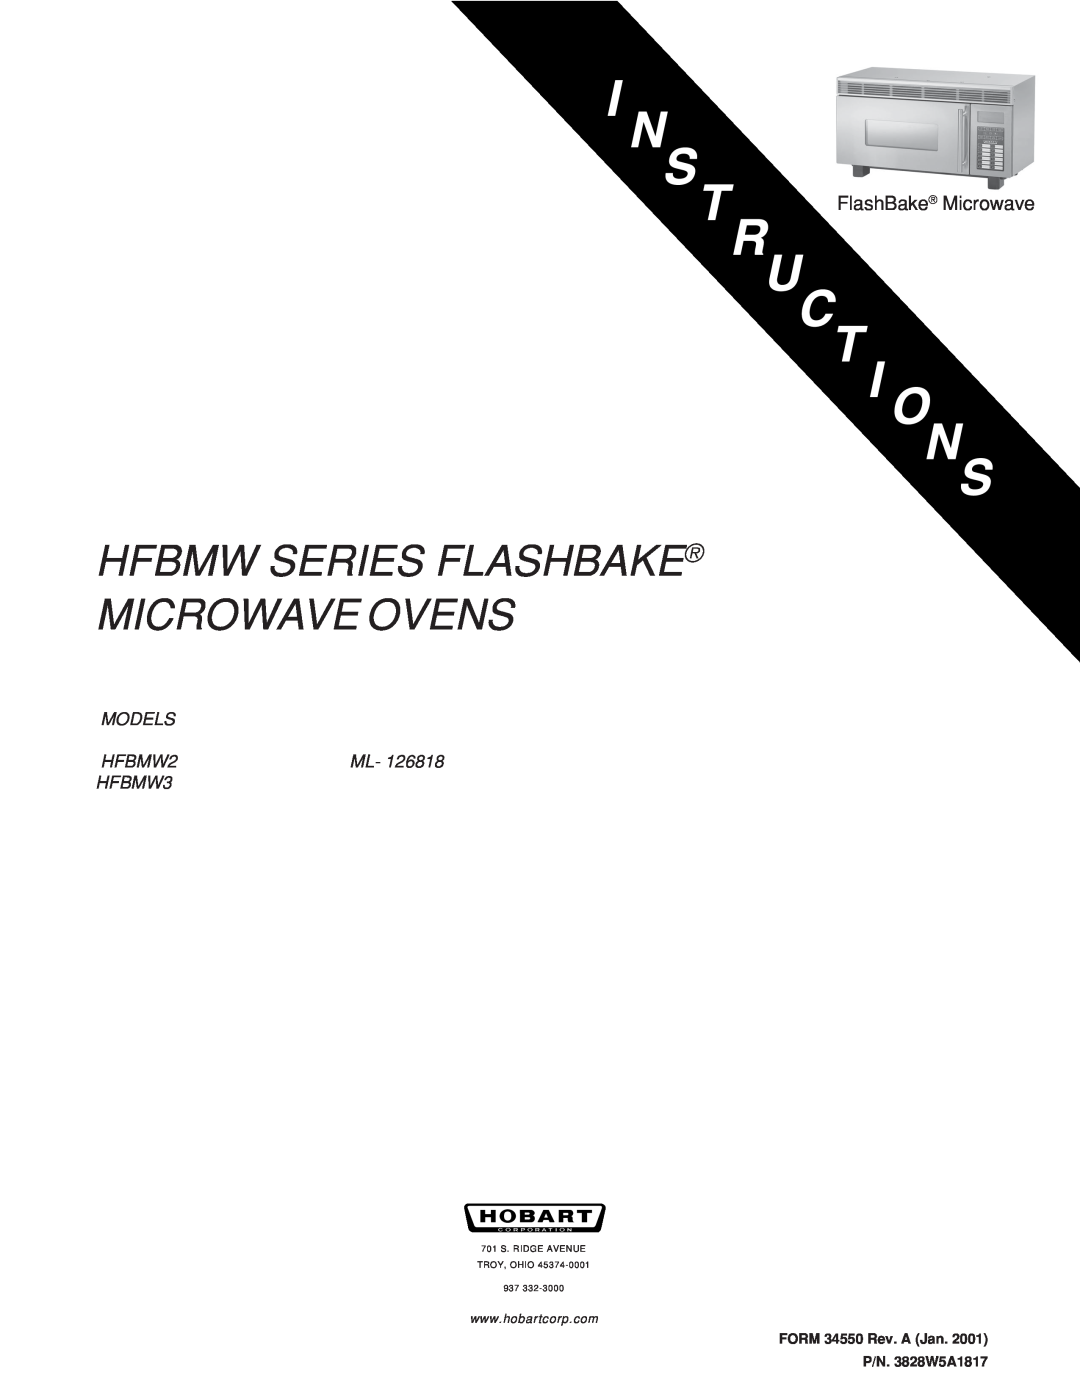 Hobart HFBMW2 ML-126818 manual Hfbmw Series Flashbake Microwave Ovens, Models, HFBMW3, 701 S. RIDGE AVENUE TROY, OHIO 